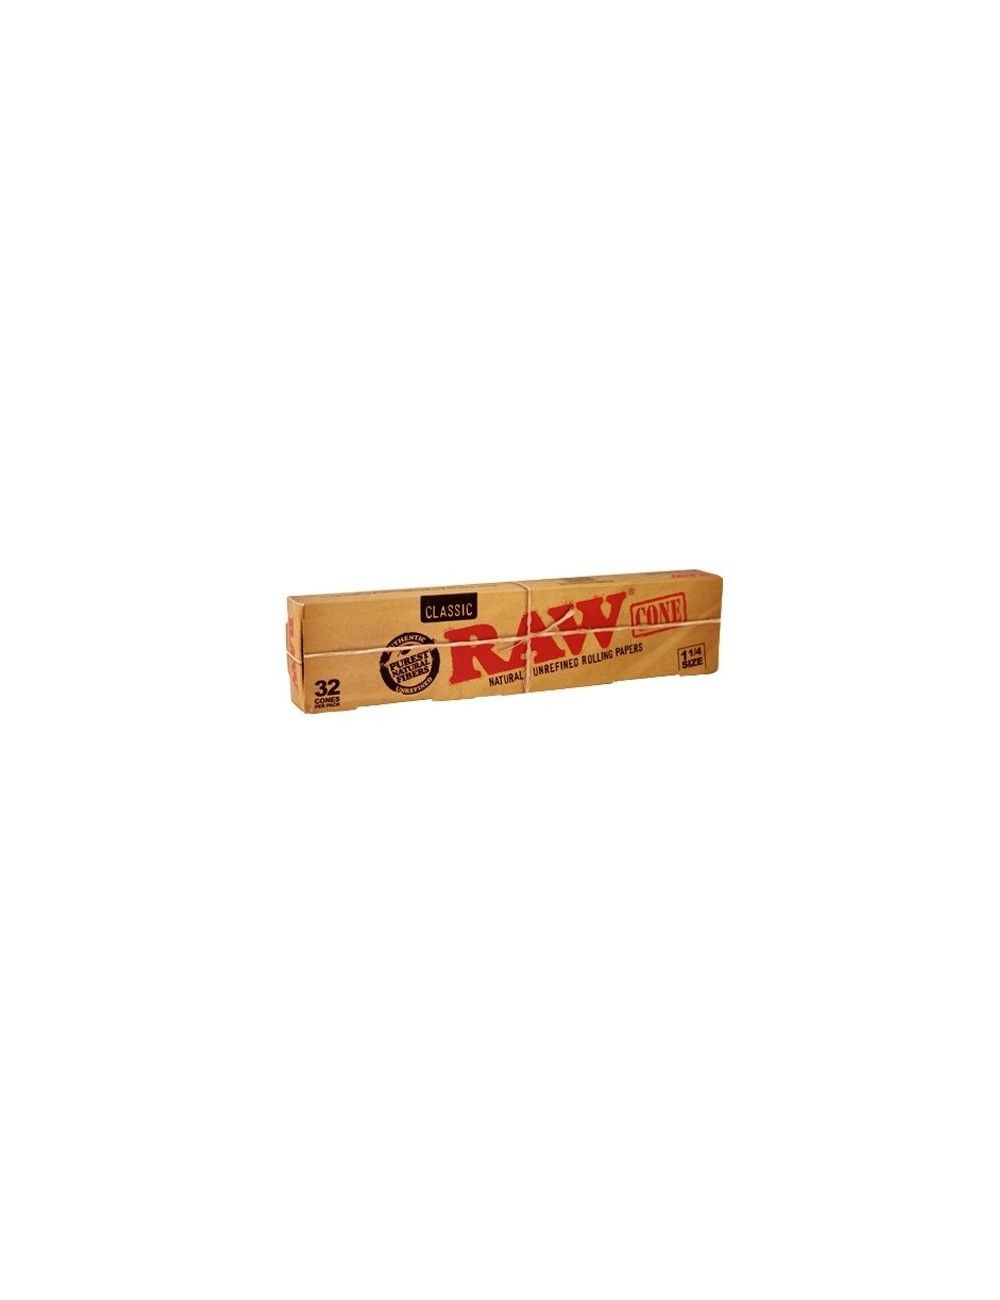 RAW Cones 1 1/4 Size Minibox